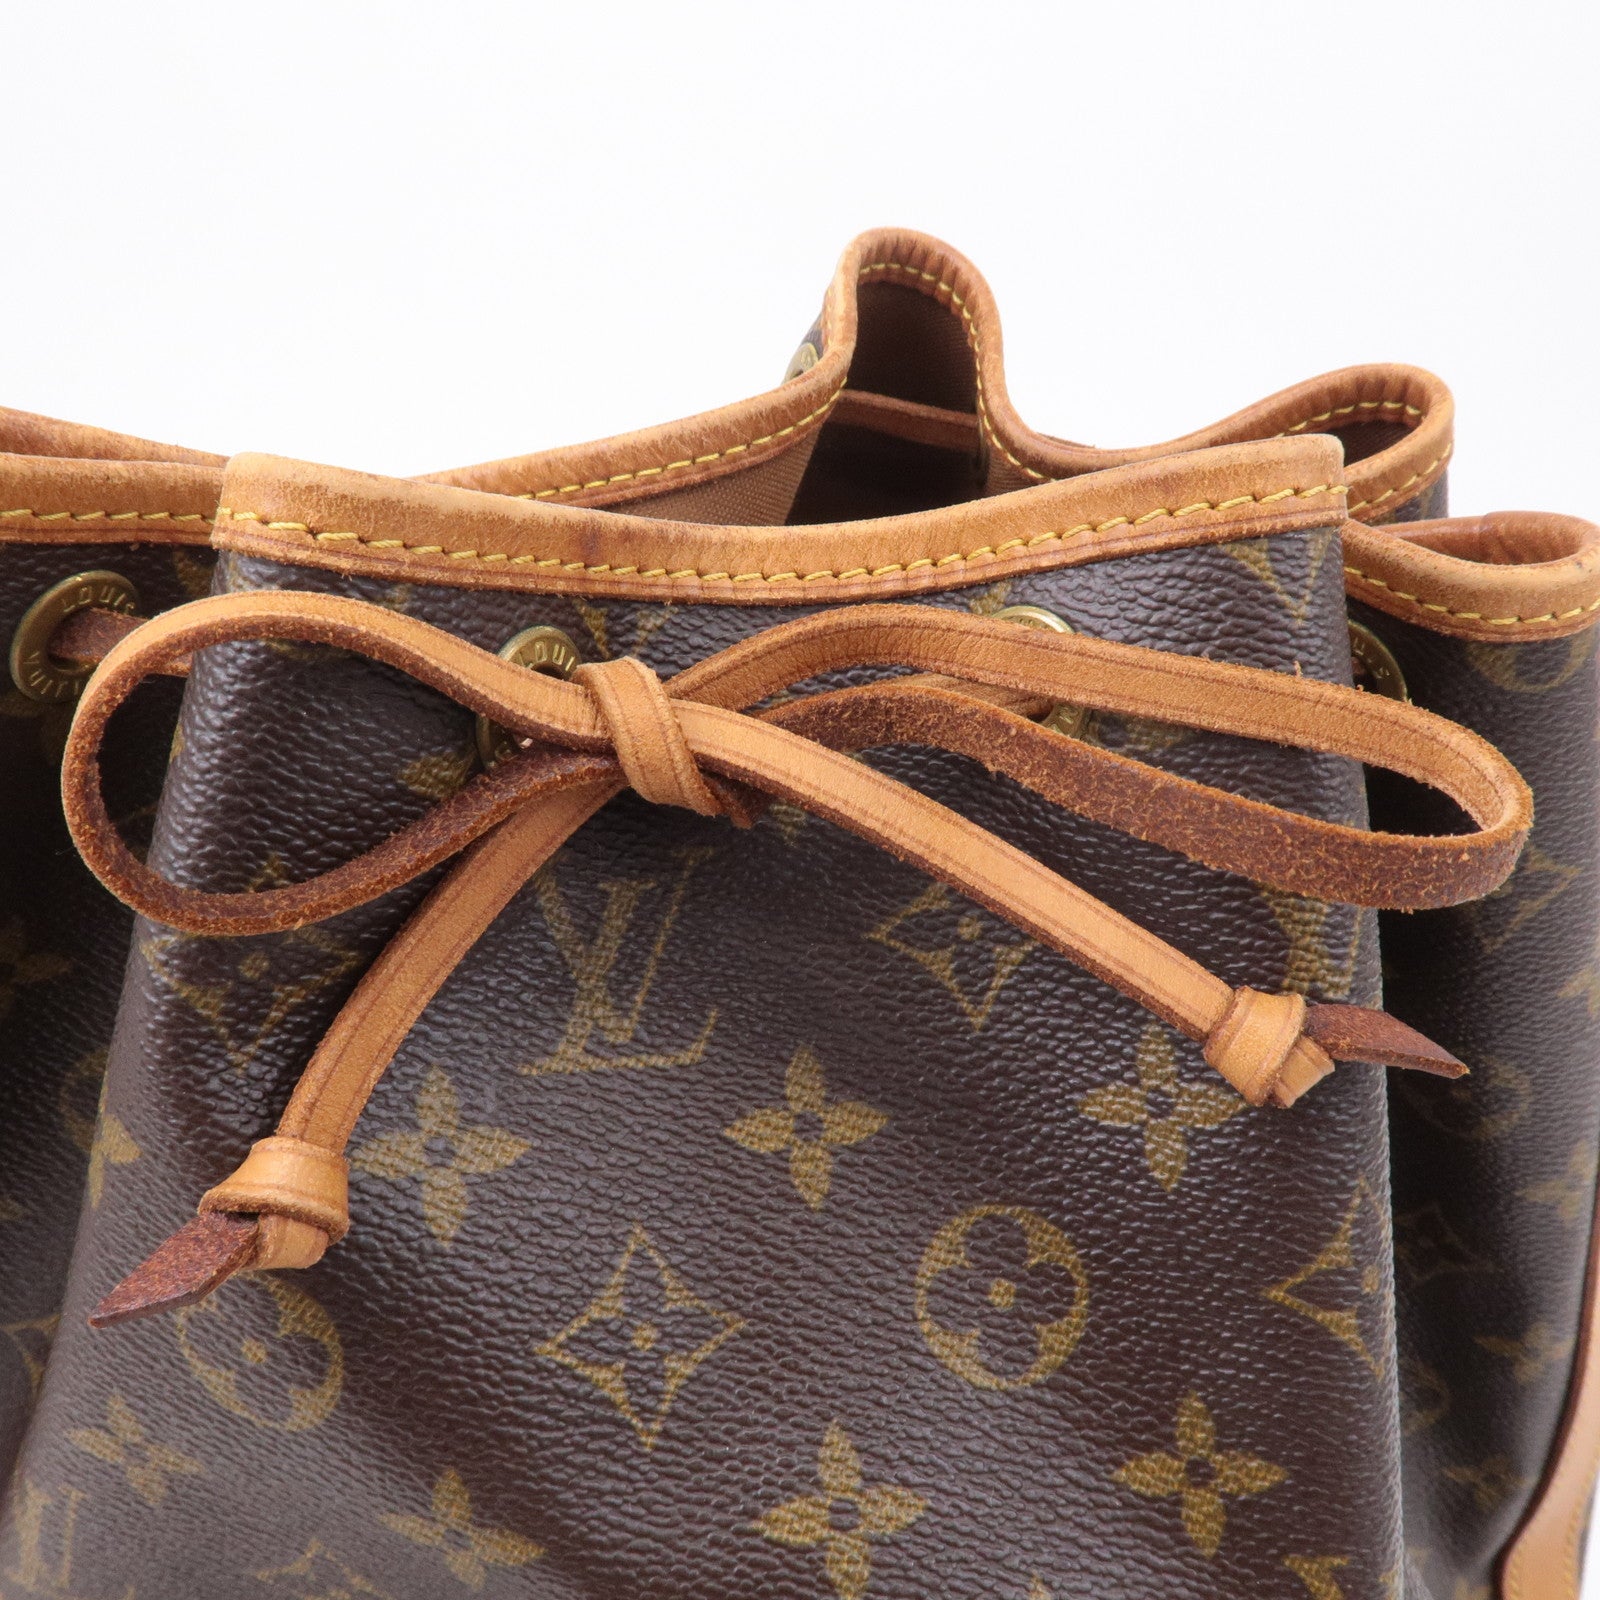 M42224 – dct - Louis - Hand - Monogram - Bag - ep_vintage luxury